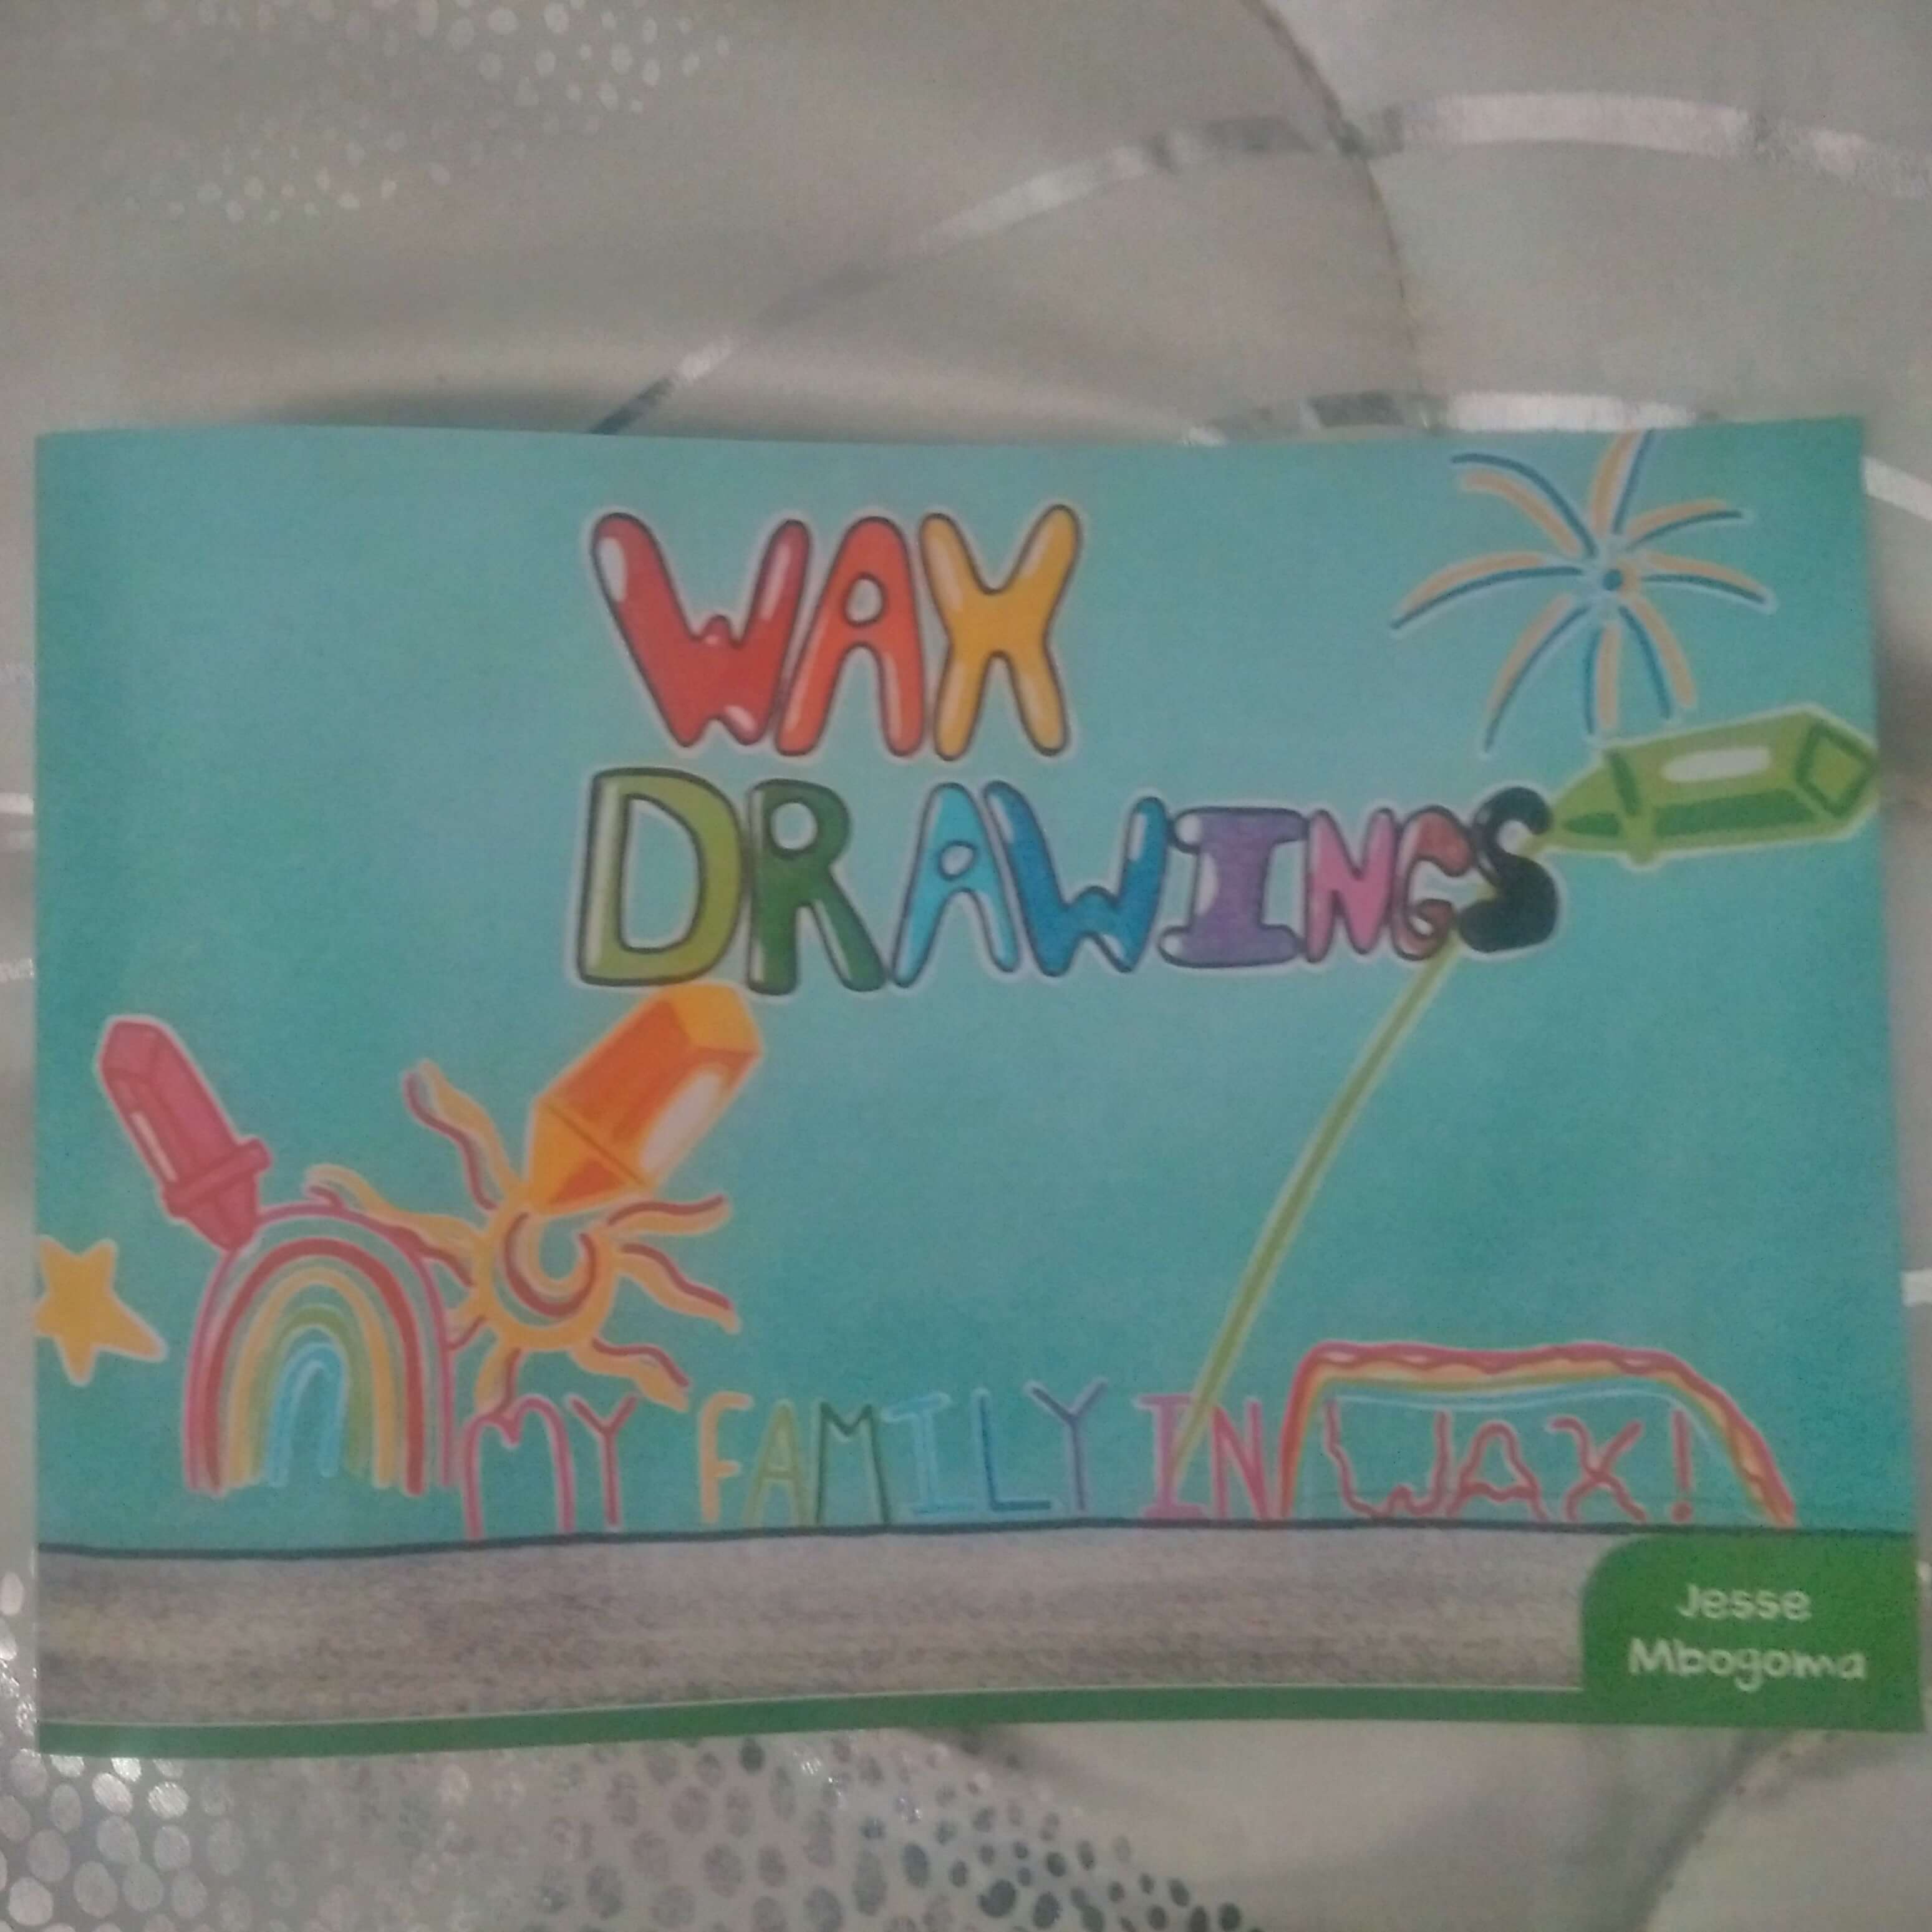 wax-drawings